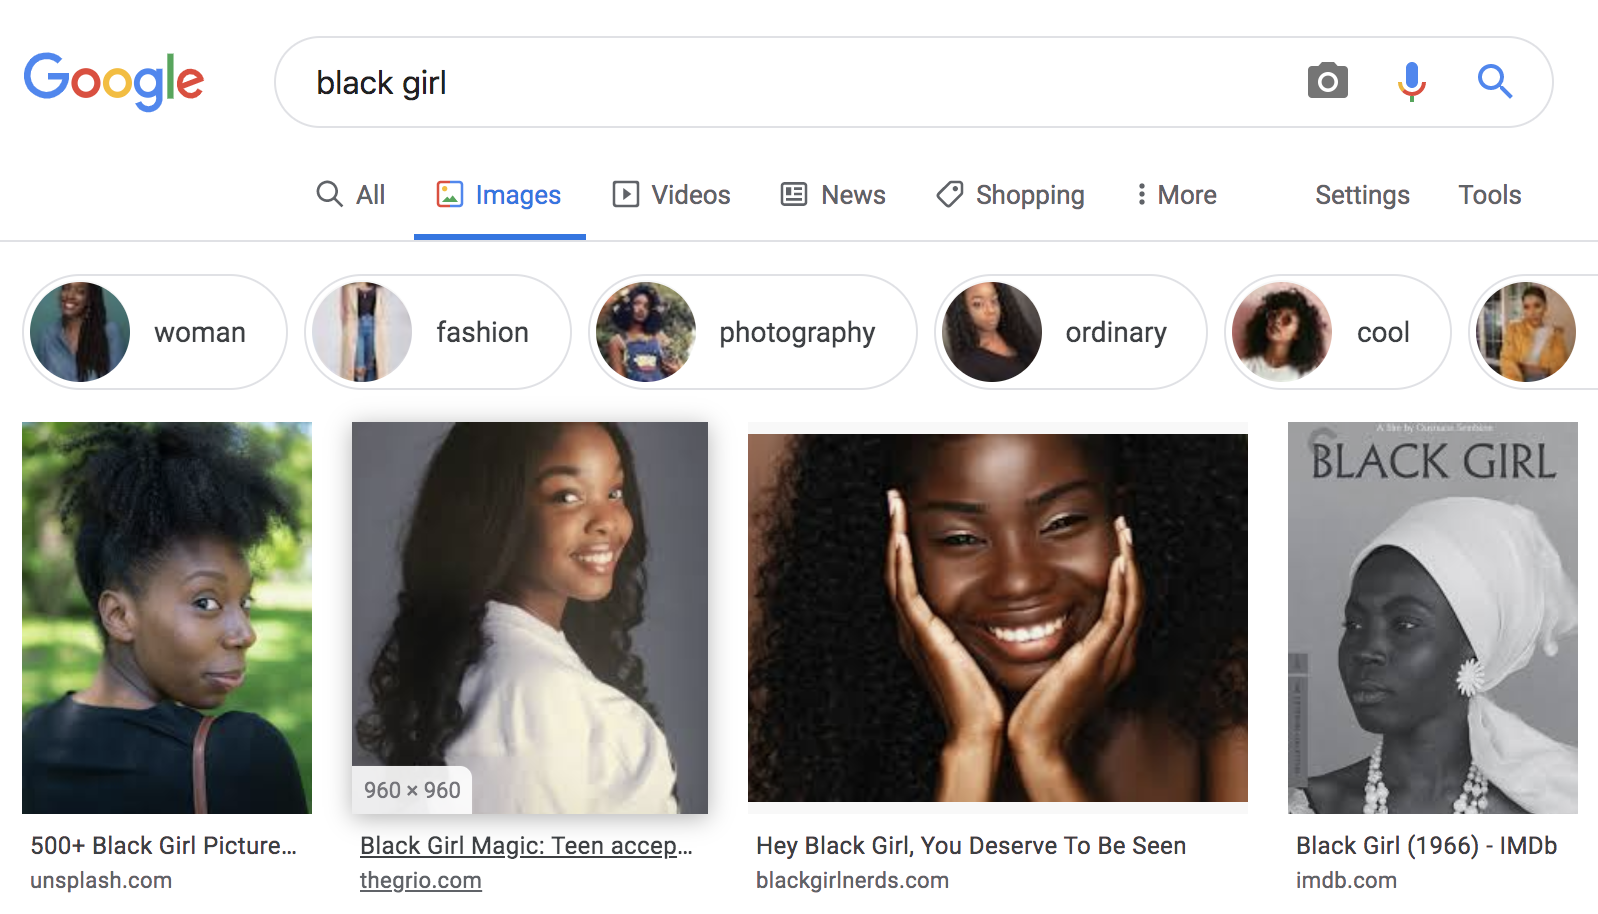 Google Image search for string "black girl"